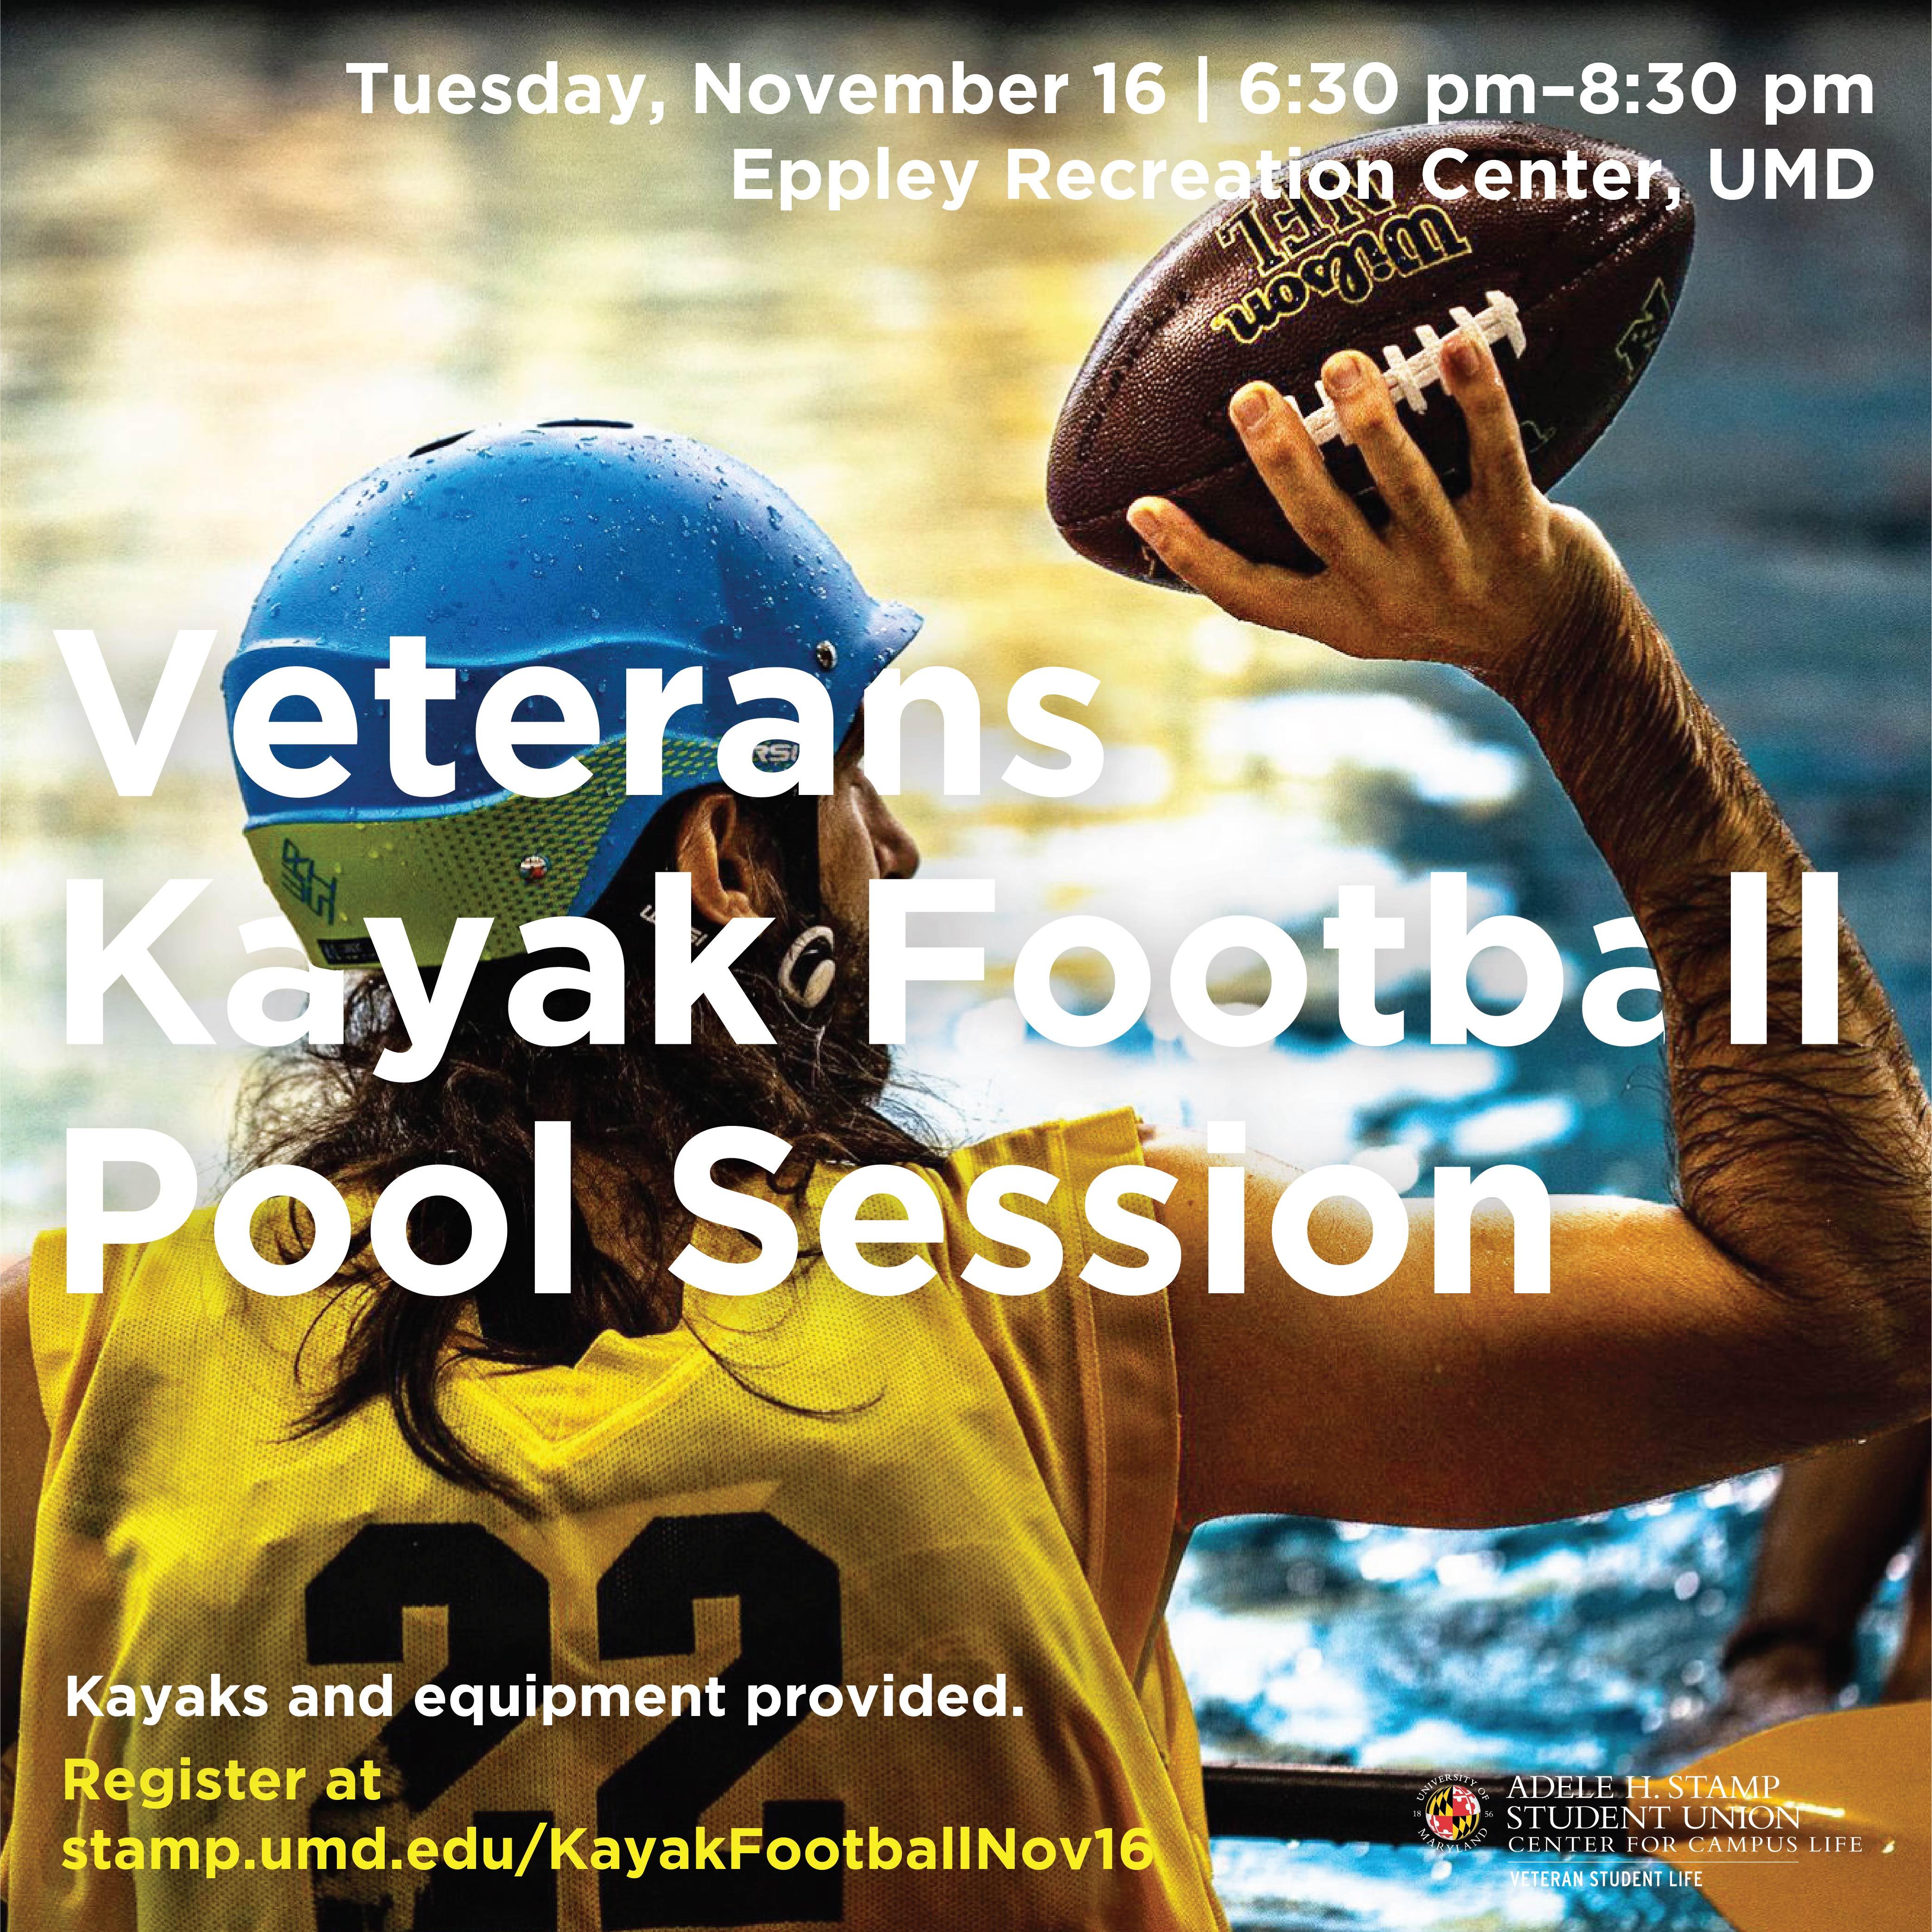 Veterans Kayak Football Pool Session